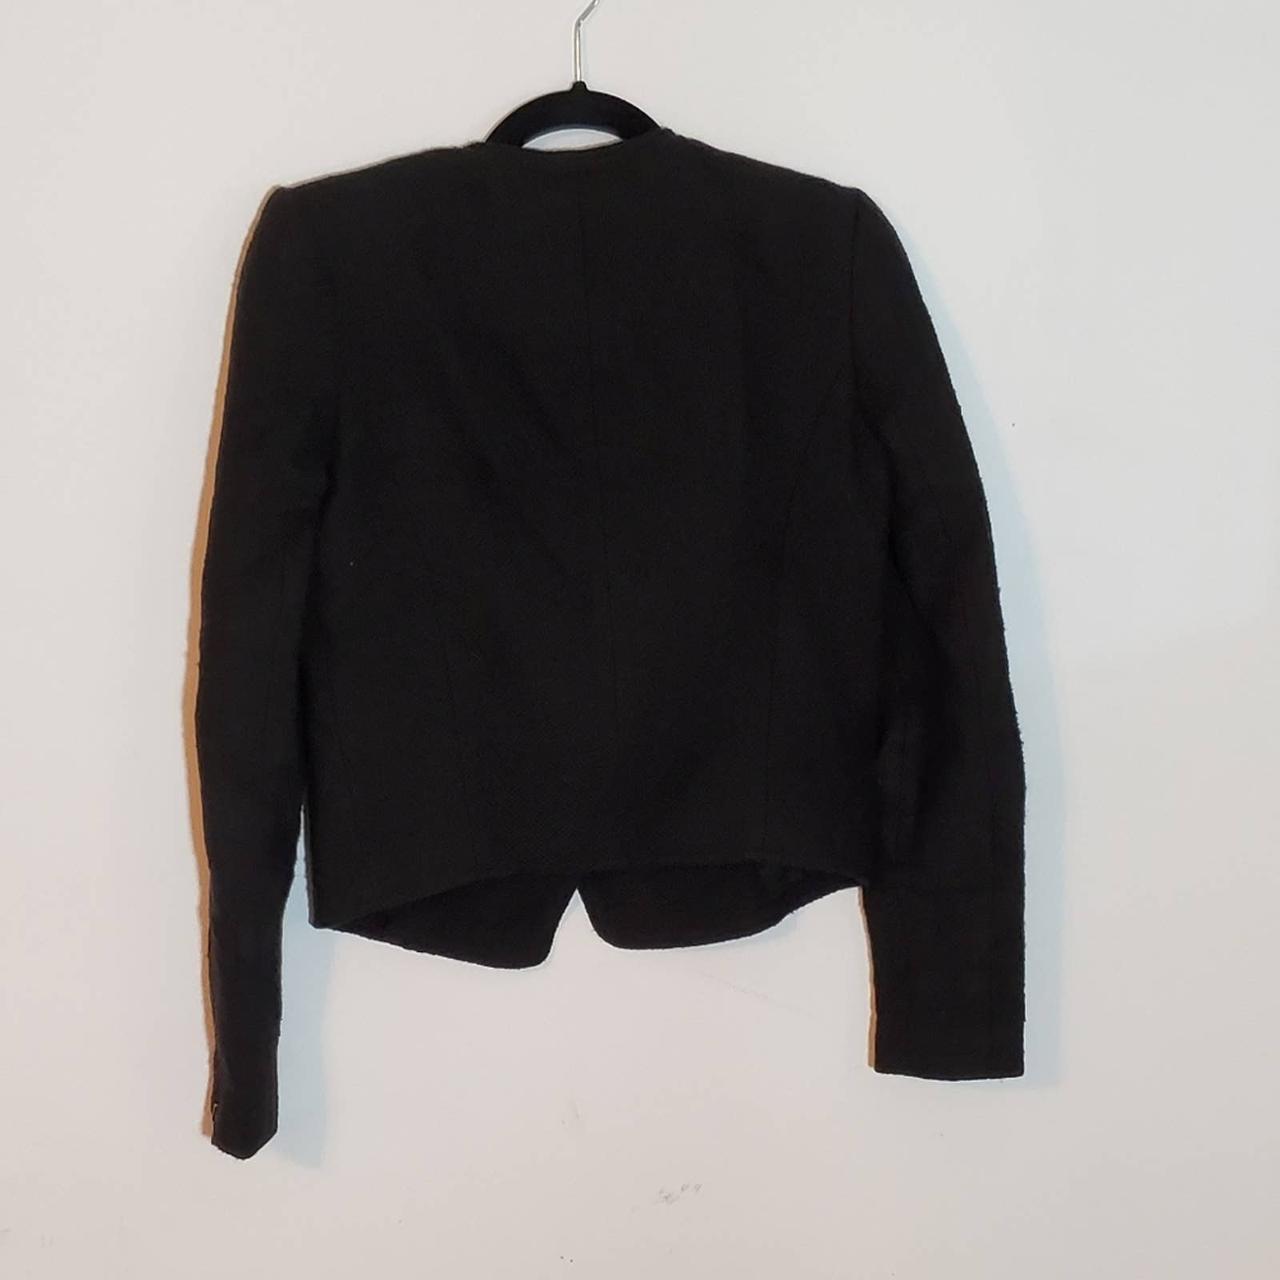 Product Image 3 - Tibi Black Asymmetrical Woven Jacket.
Size